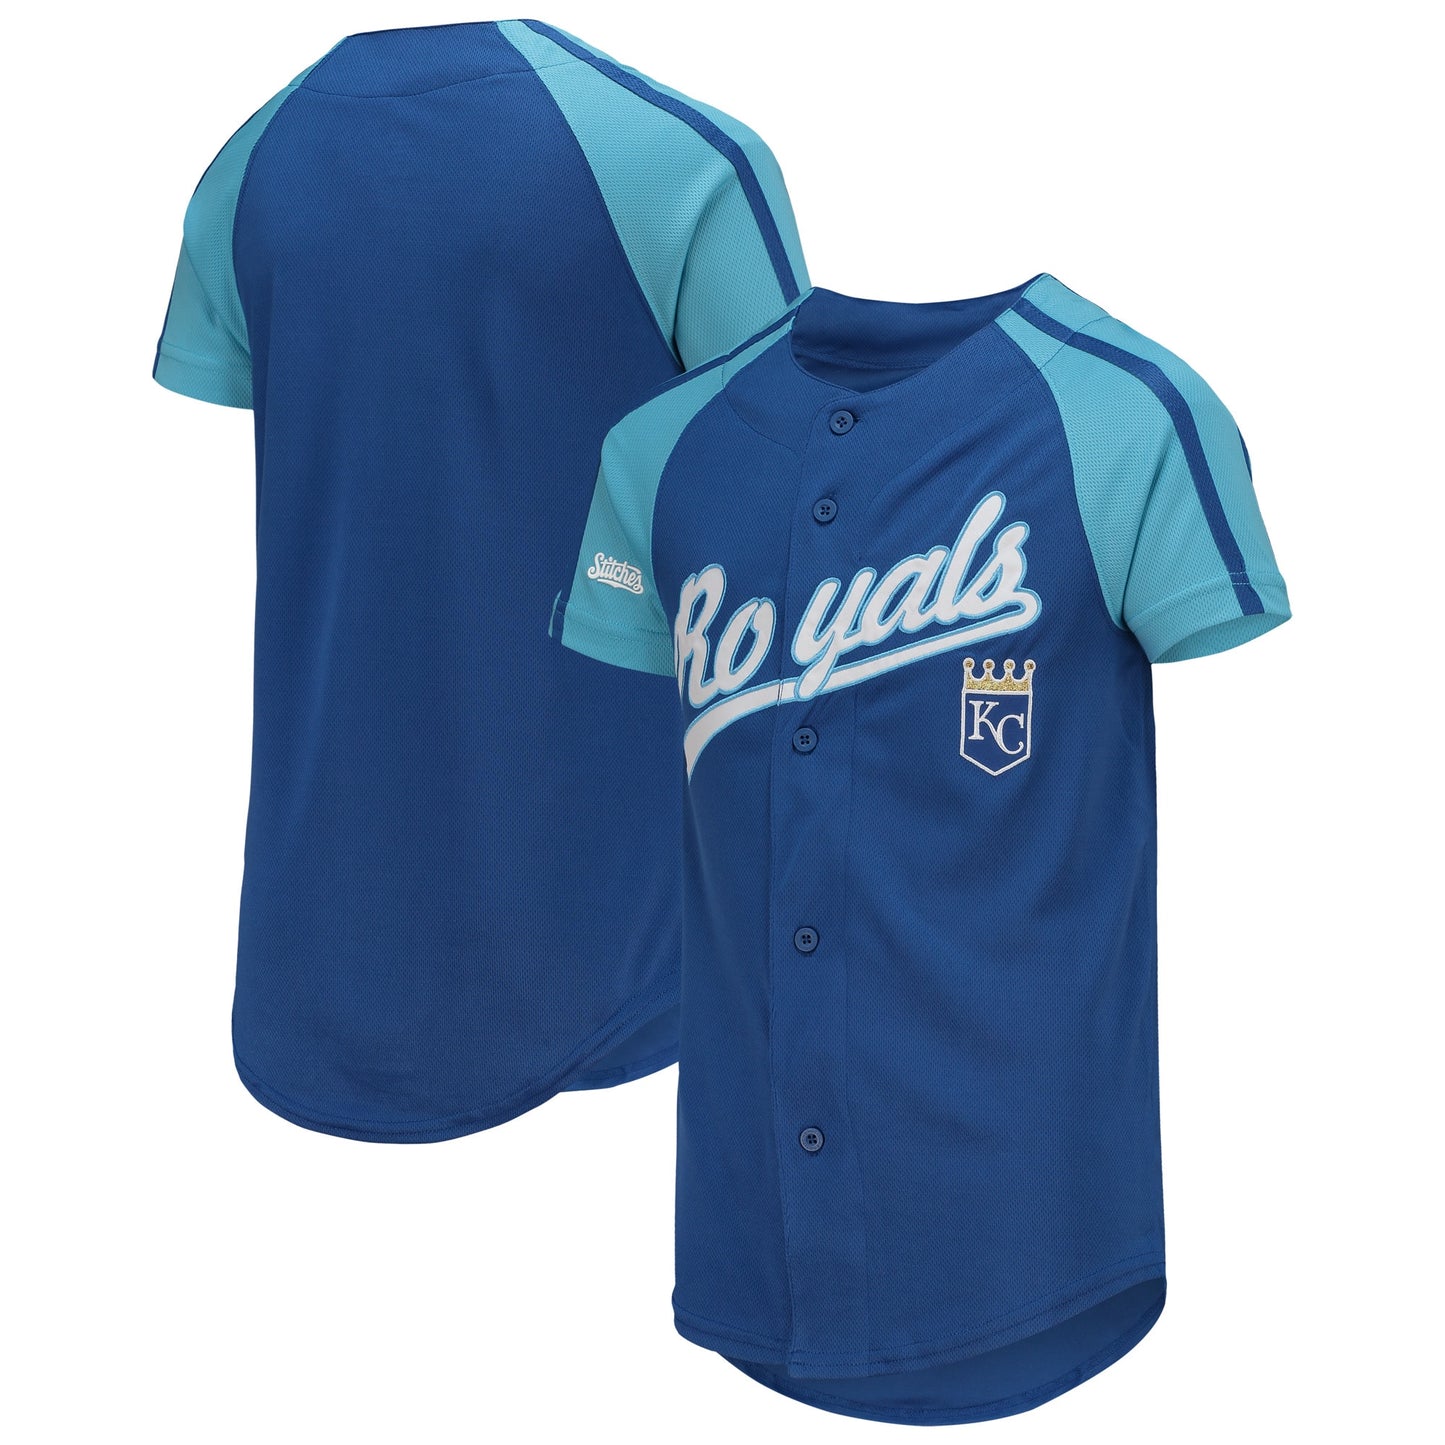 Kansas City Royals Stitches Youth Team Logo Jersey - Royal